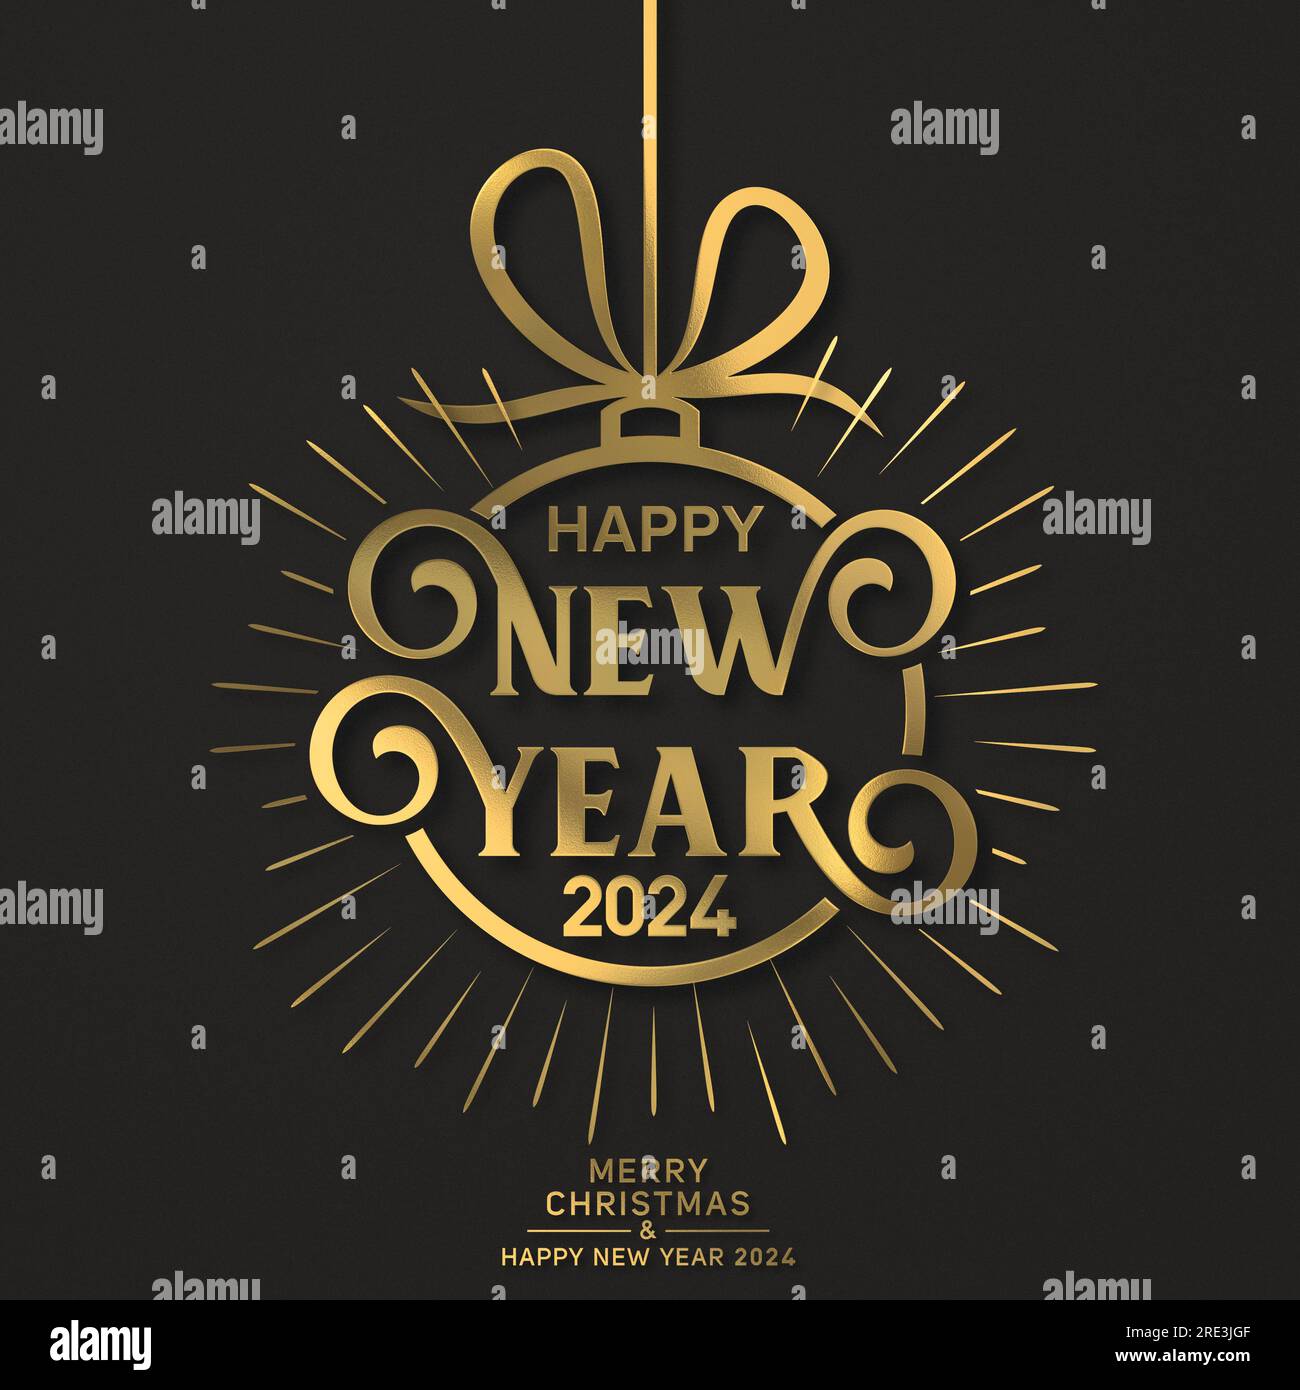 Merry Christmas and Happy New Year 2024 Elegant Golden Design Stock Photo